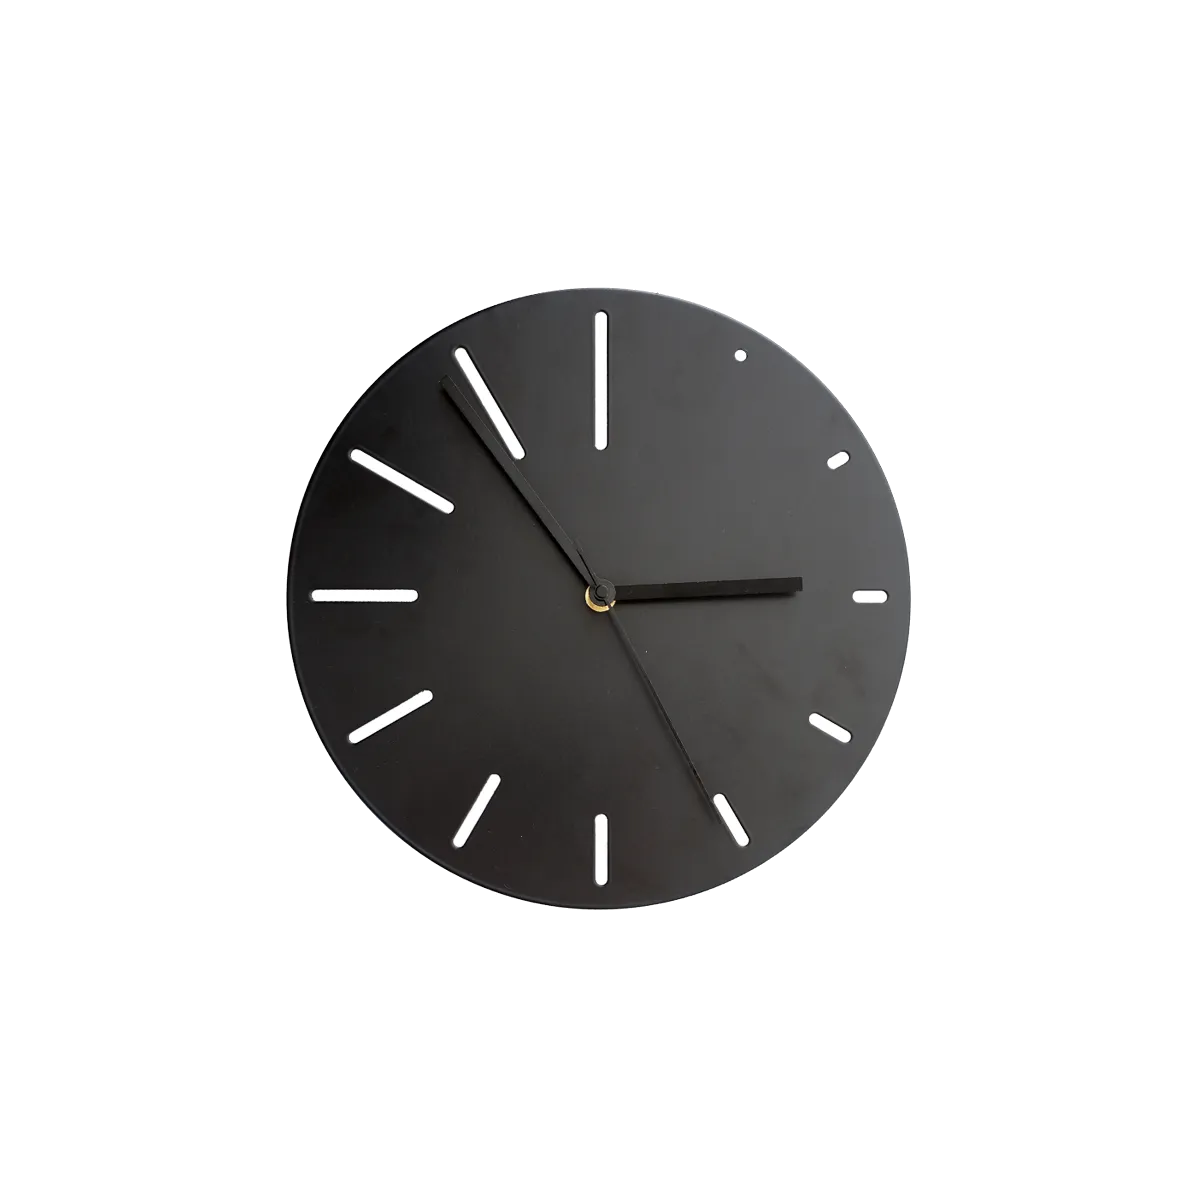 Wall Clock “Poggenklas” – black